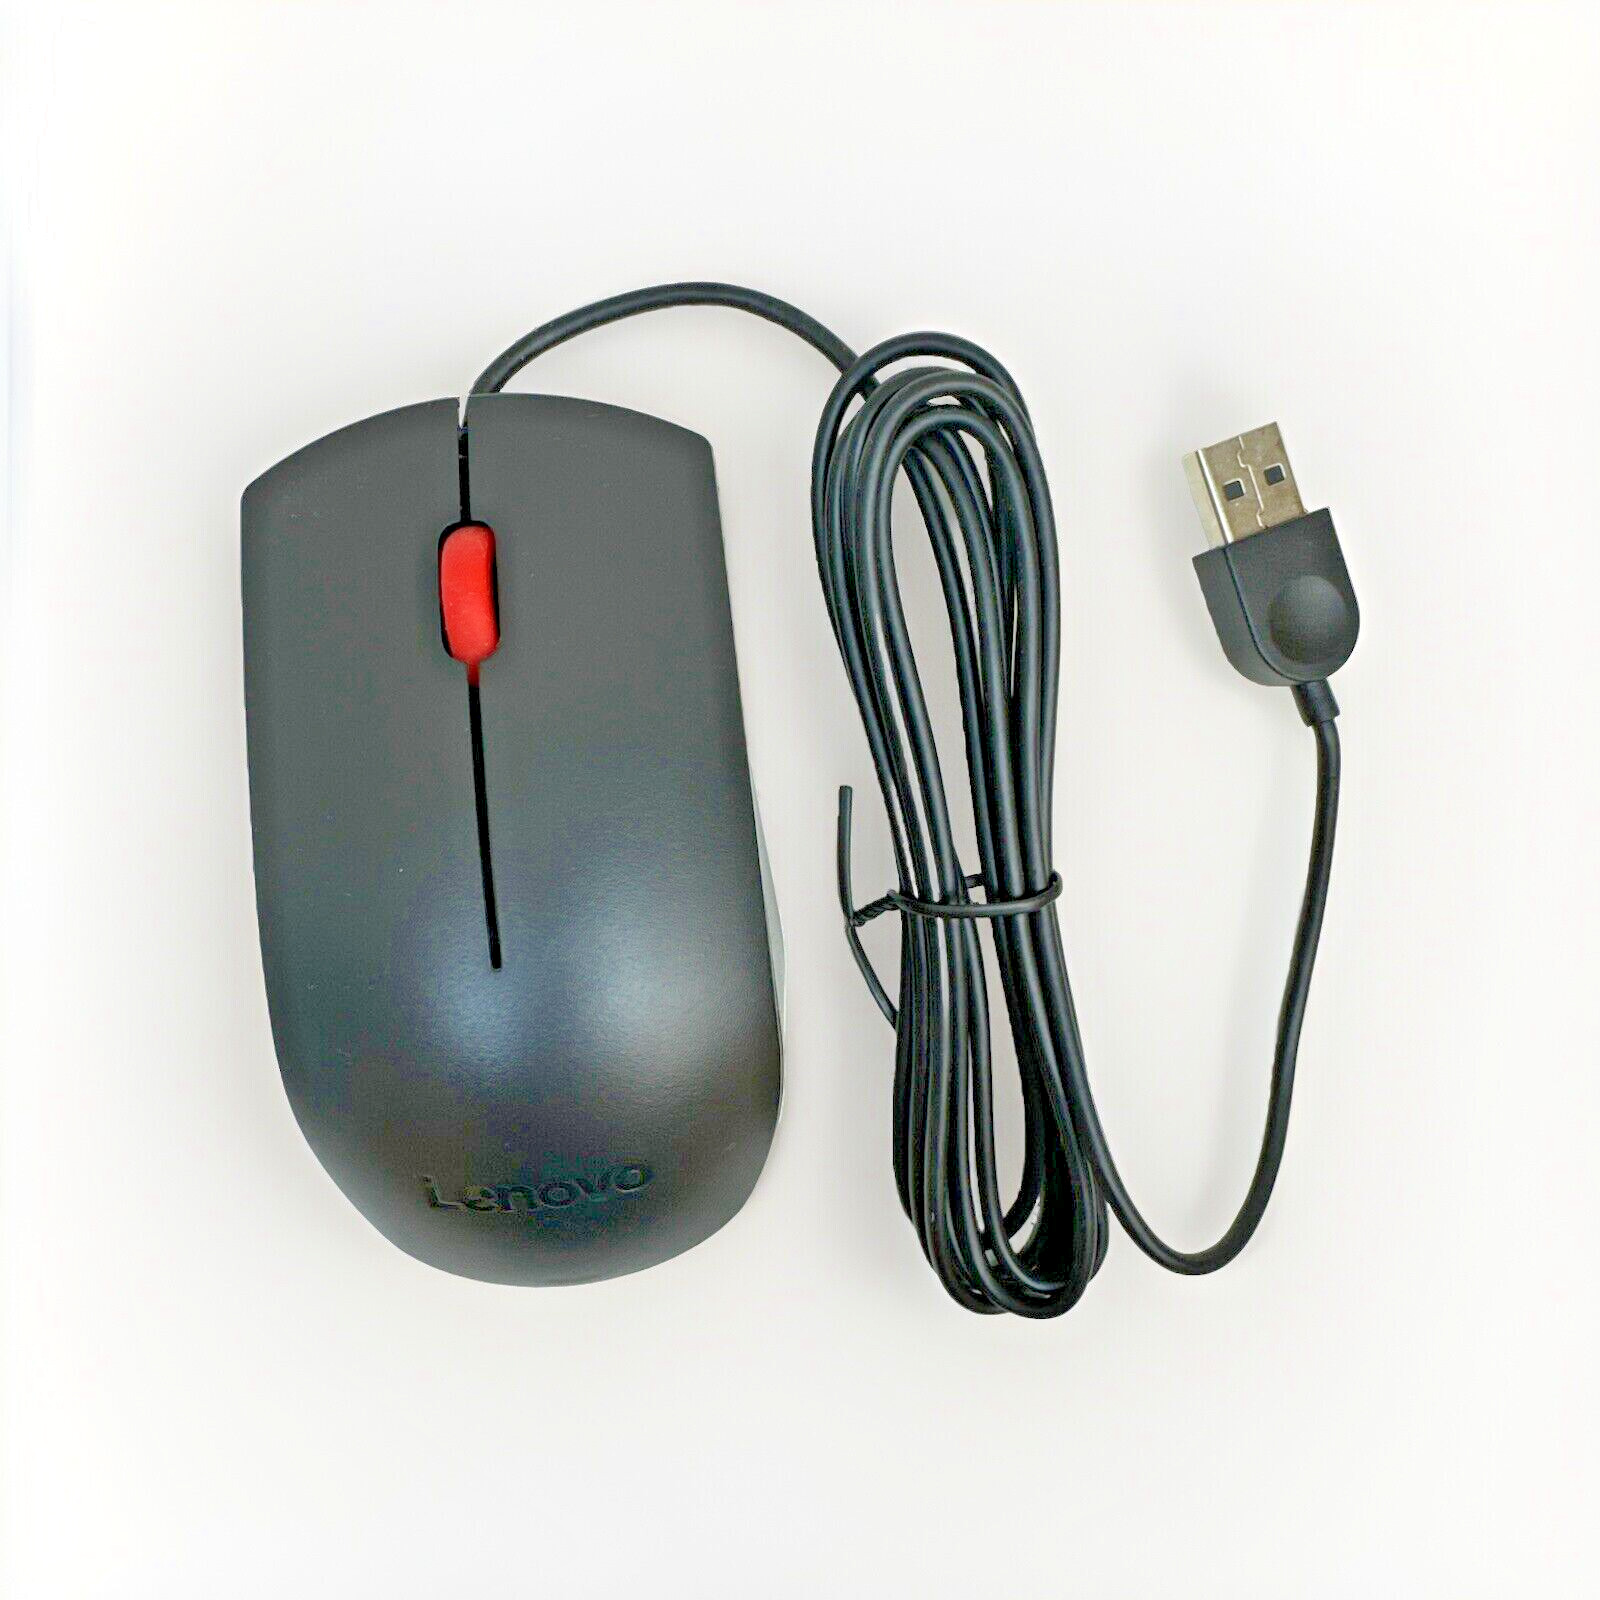 (Lot of 34) Lenovo Optical USB Mouse 1000 DPI and Scroll Wheel (00PH133) New